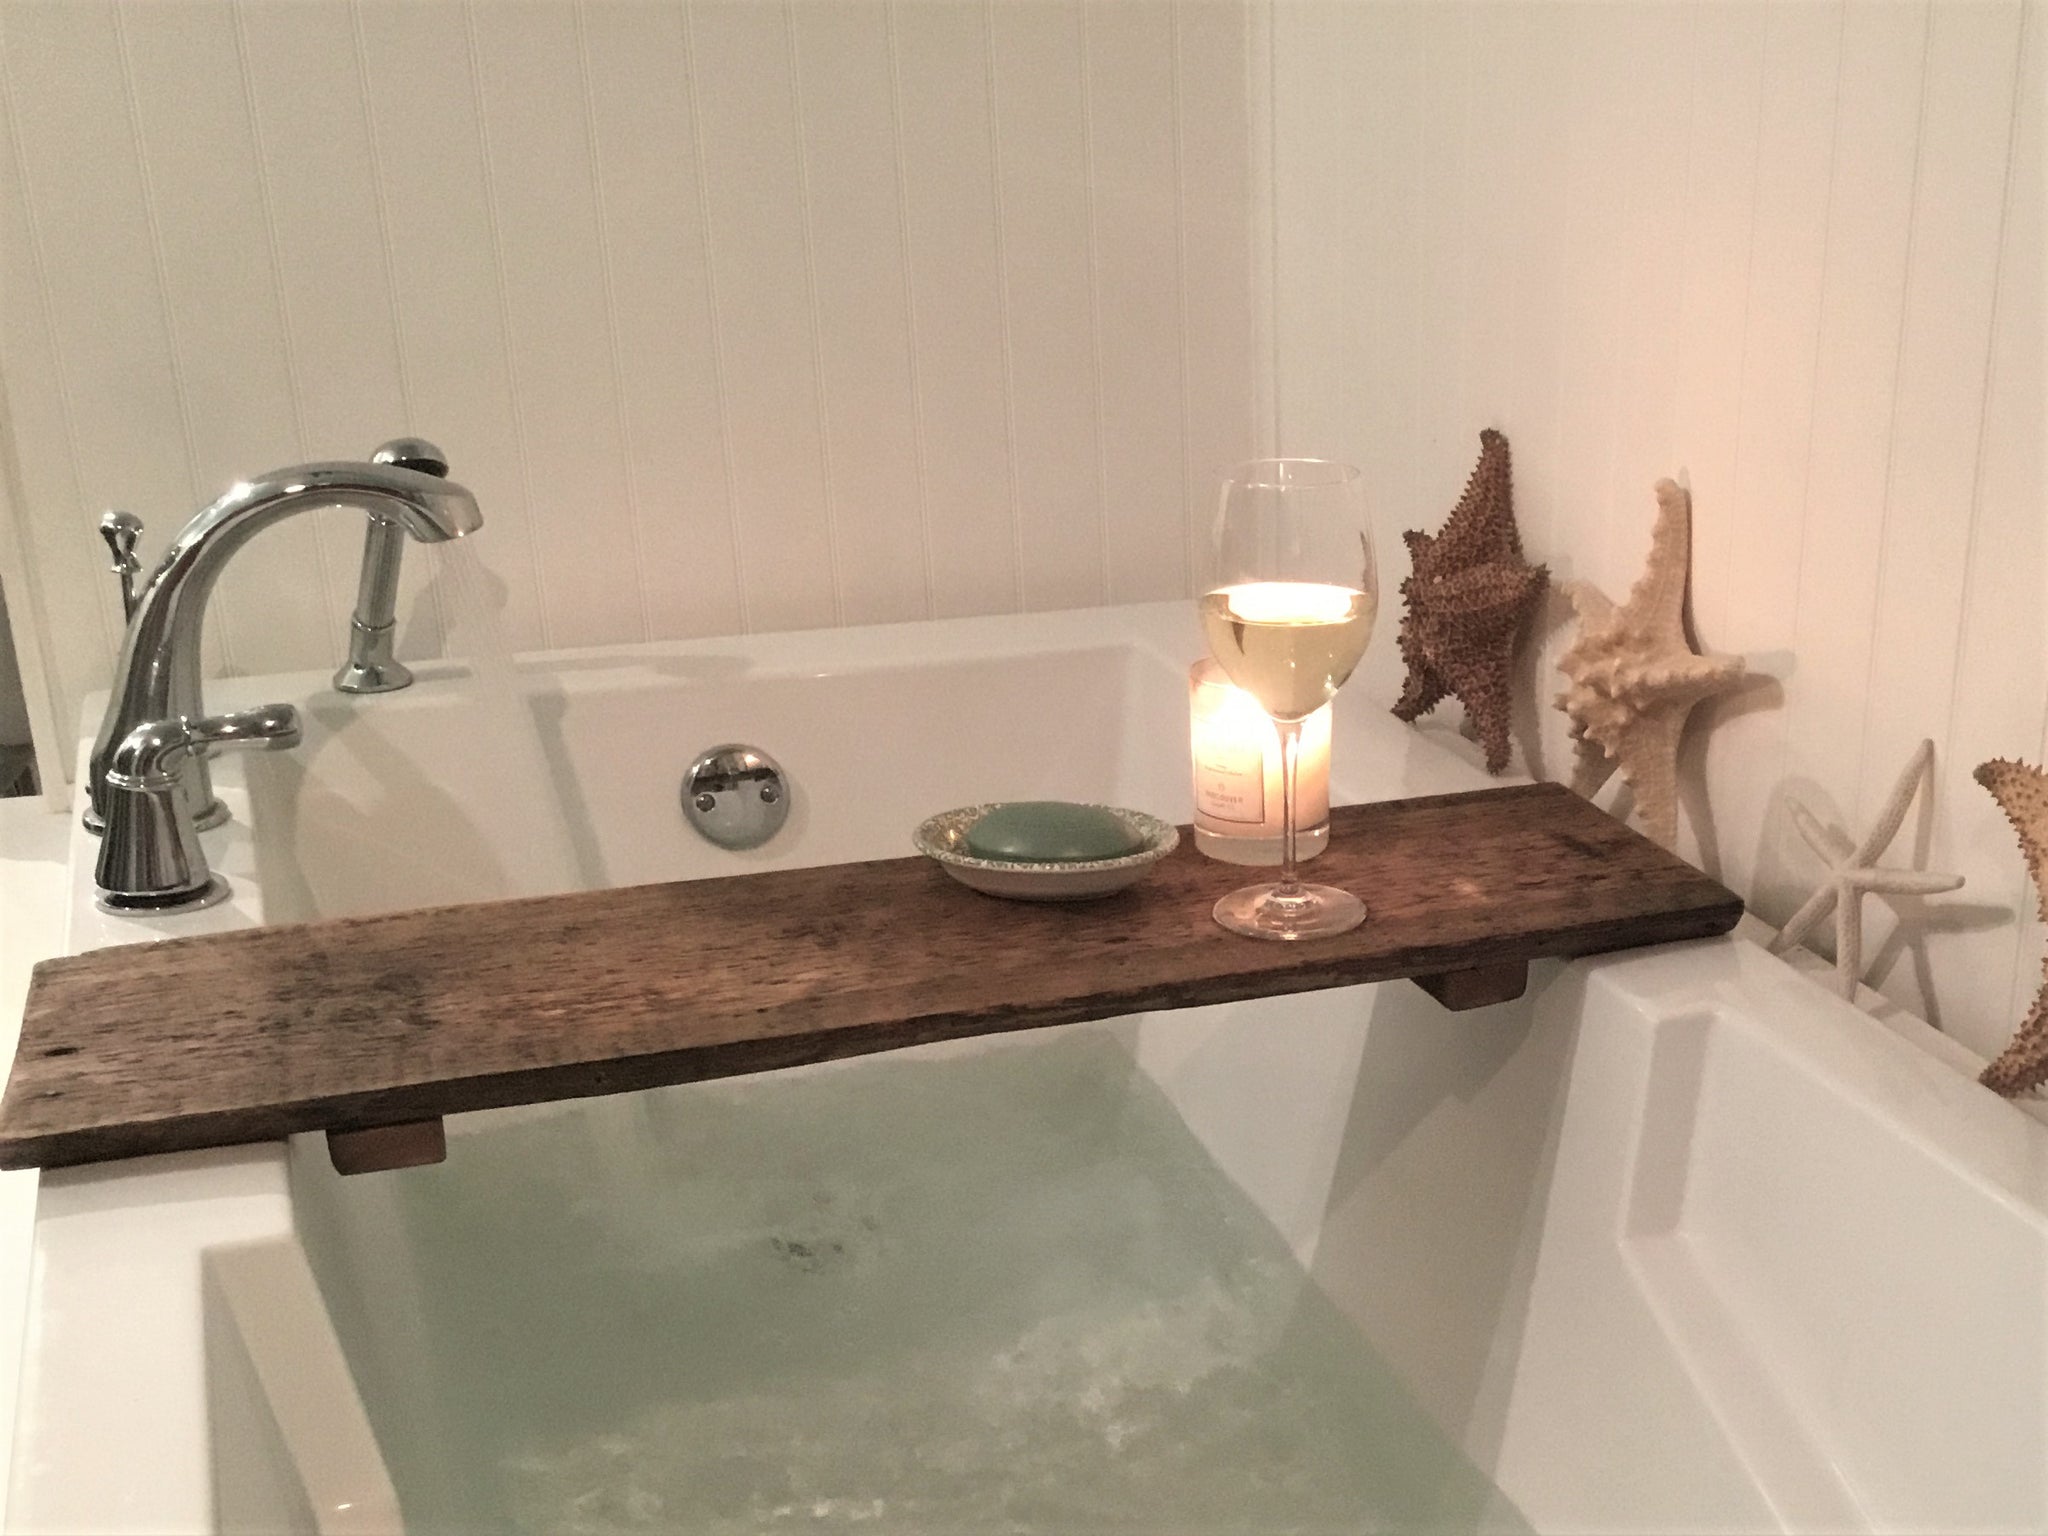 DIY Bathtub Tray Using Scrap Wood [3 Different ways] - Her Happy Home